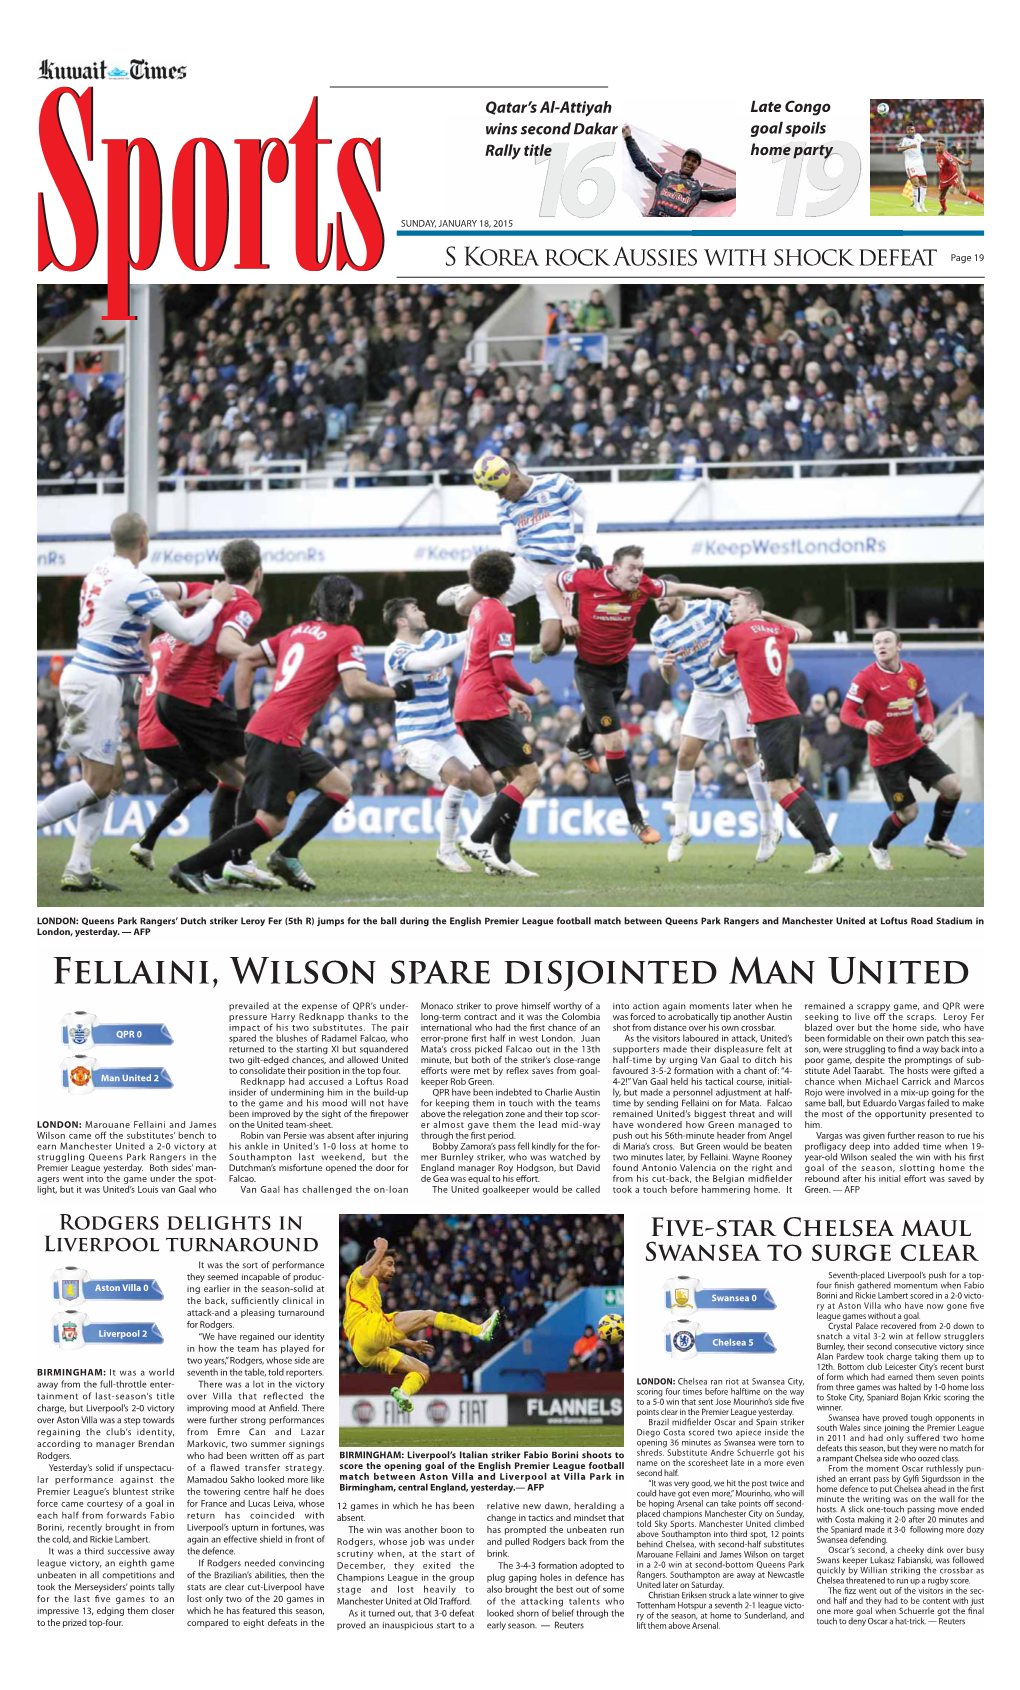 Fellaini, Wilson Spare Disjointed Man United